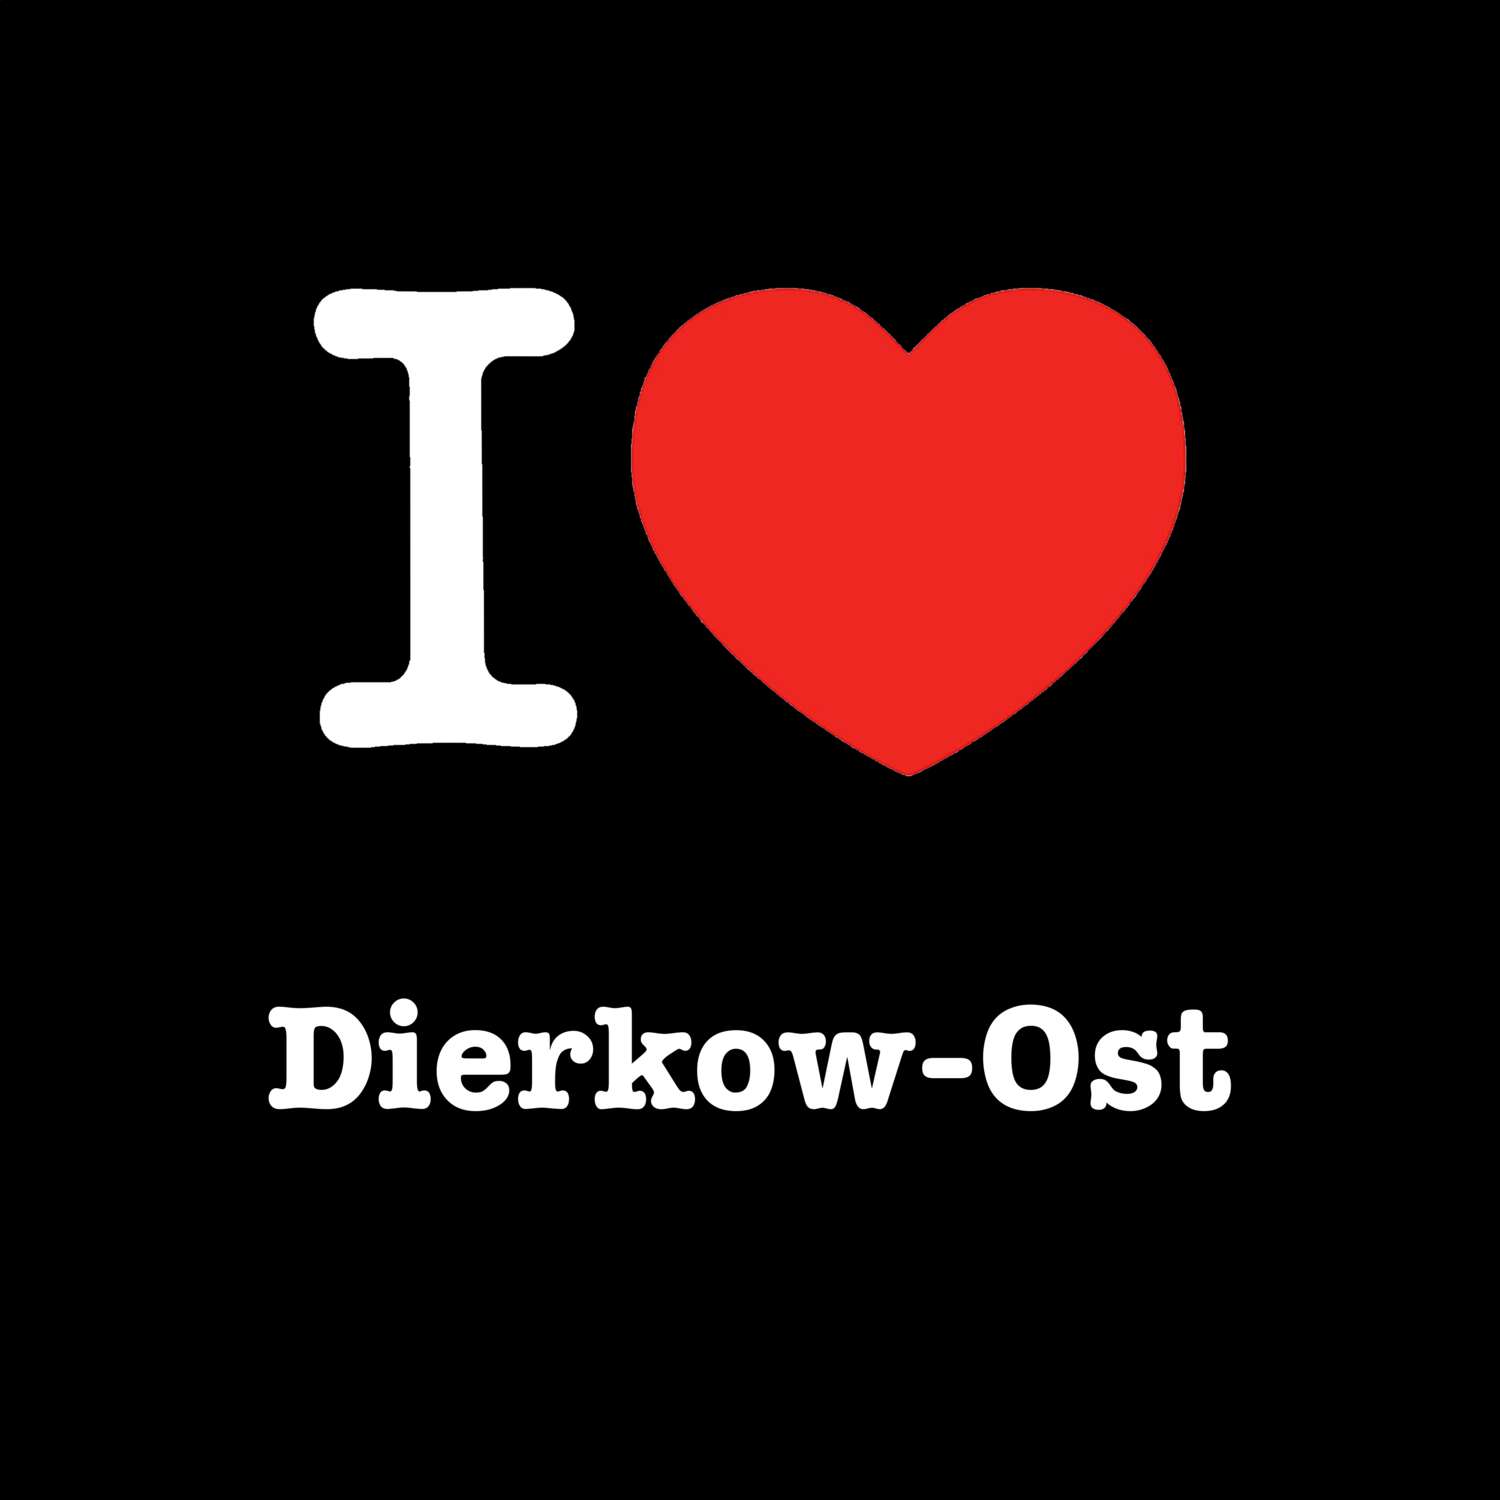 Dierkow-Ost T-Shirt »I love«